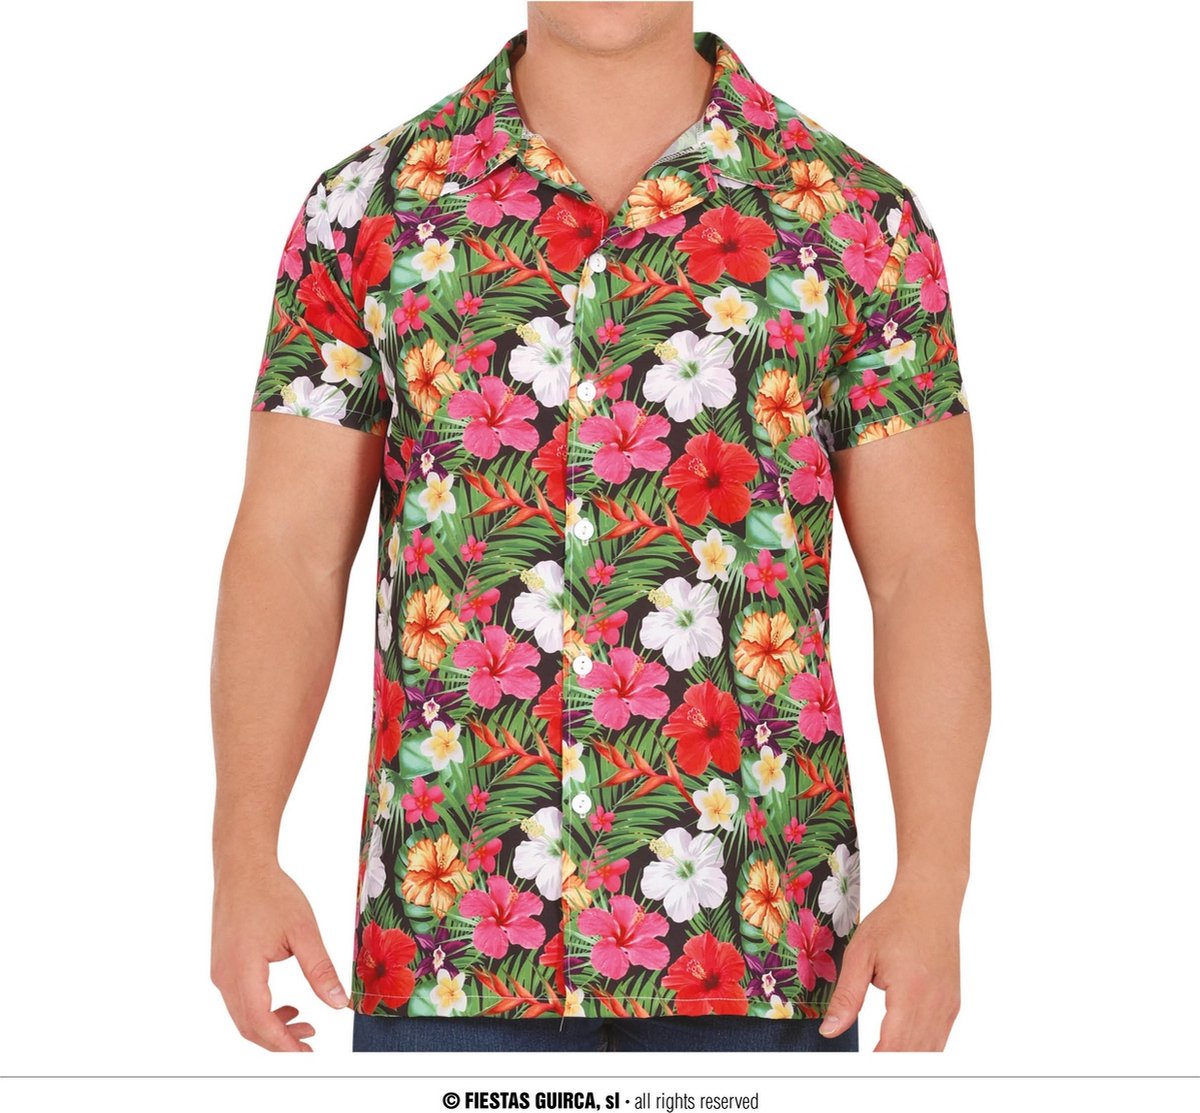 Guirca - Hawaii & Carribean & Tropisch Kostuum - Tropical Hawaii Flower Beach Blouse Man - Multicolor - Maat 52-54 - Carnavalskleding - Verkleedkleding